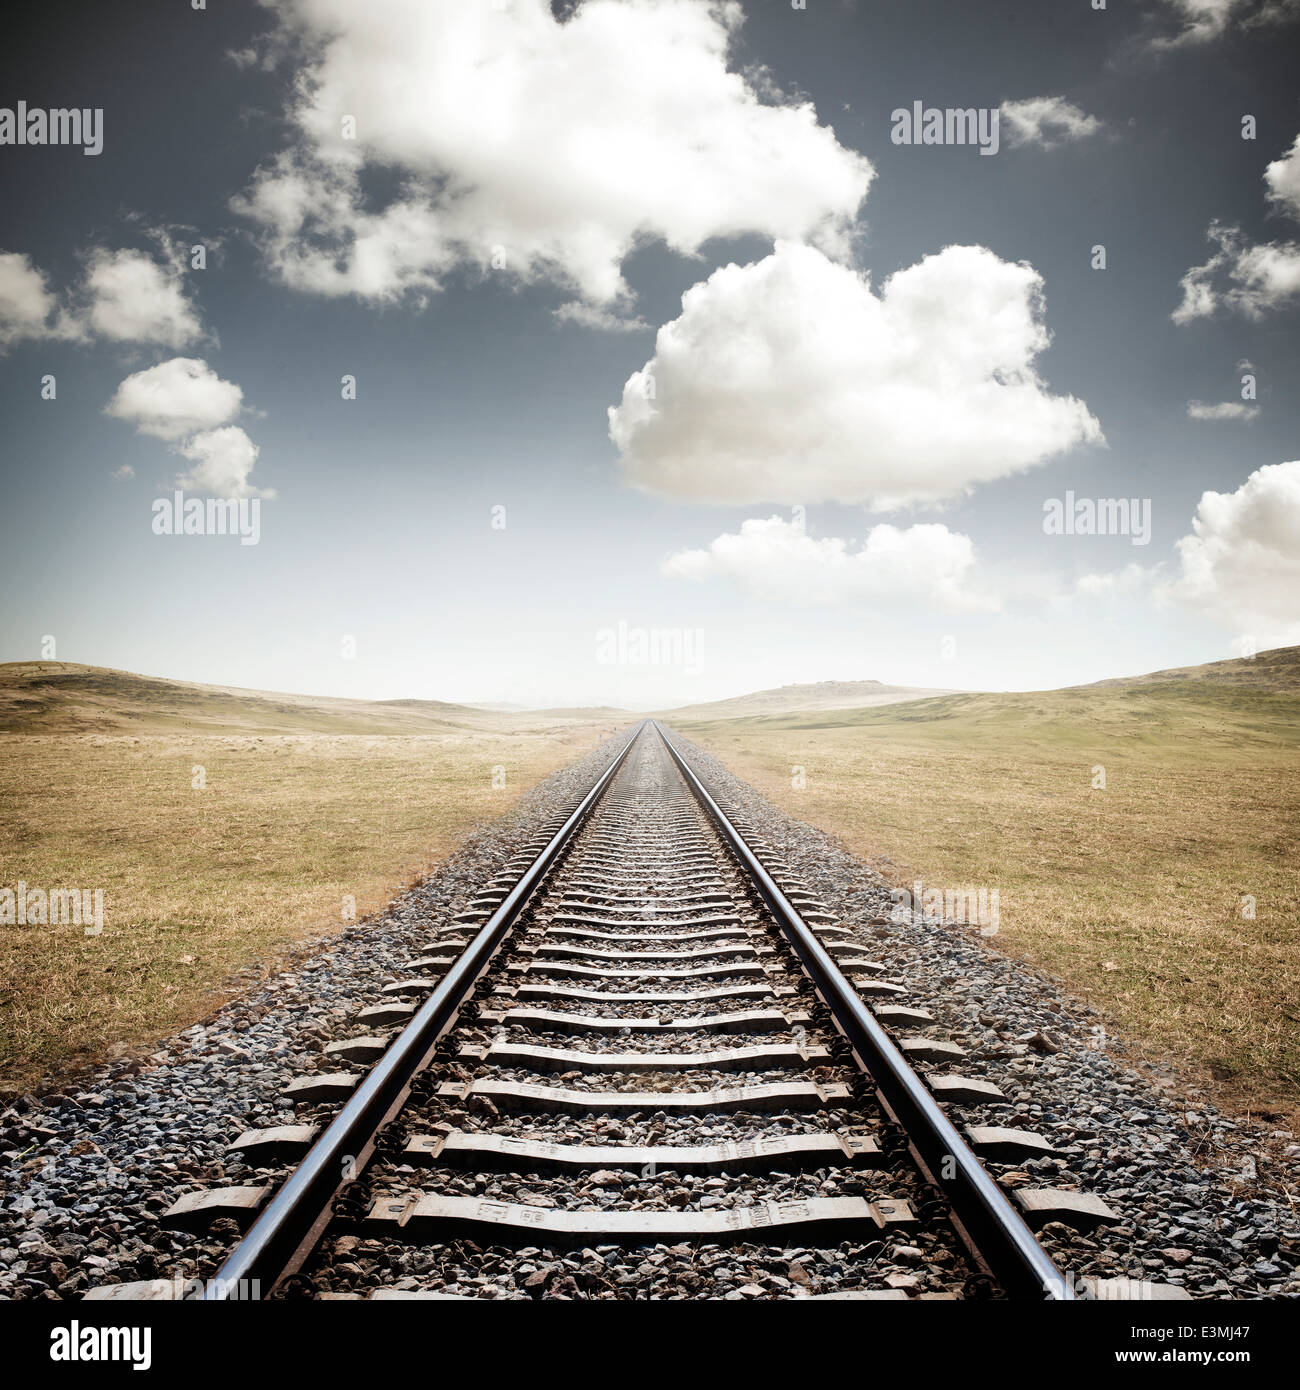 Railway Tracks. A long journey ahead. Stock Photo